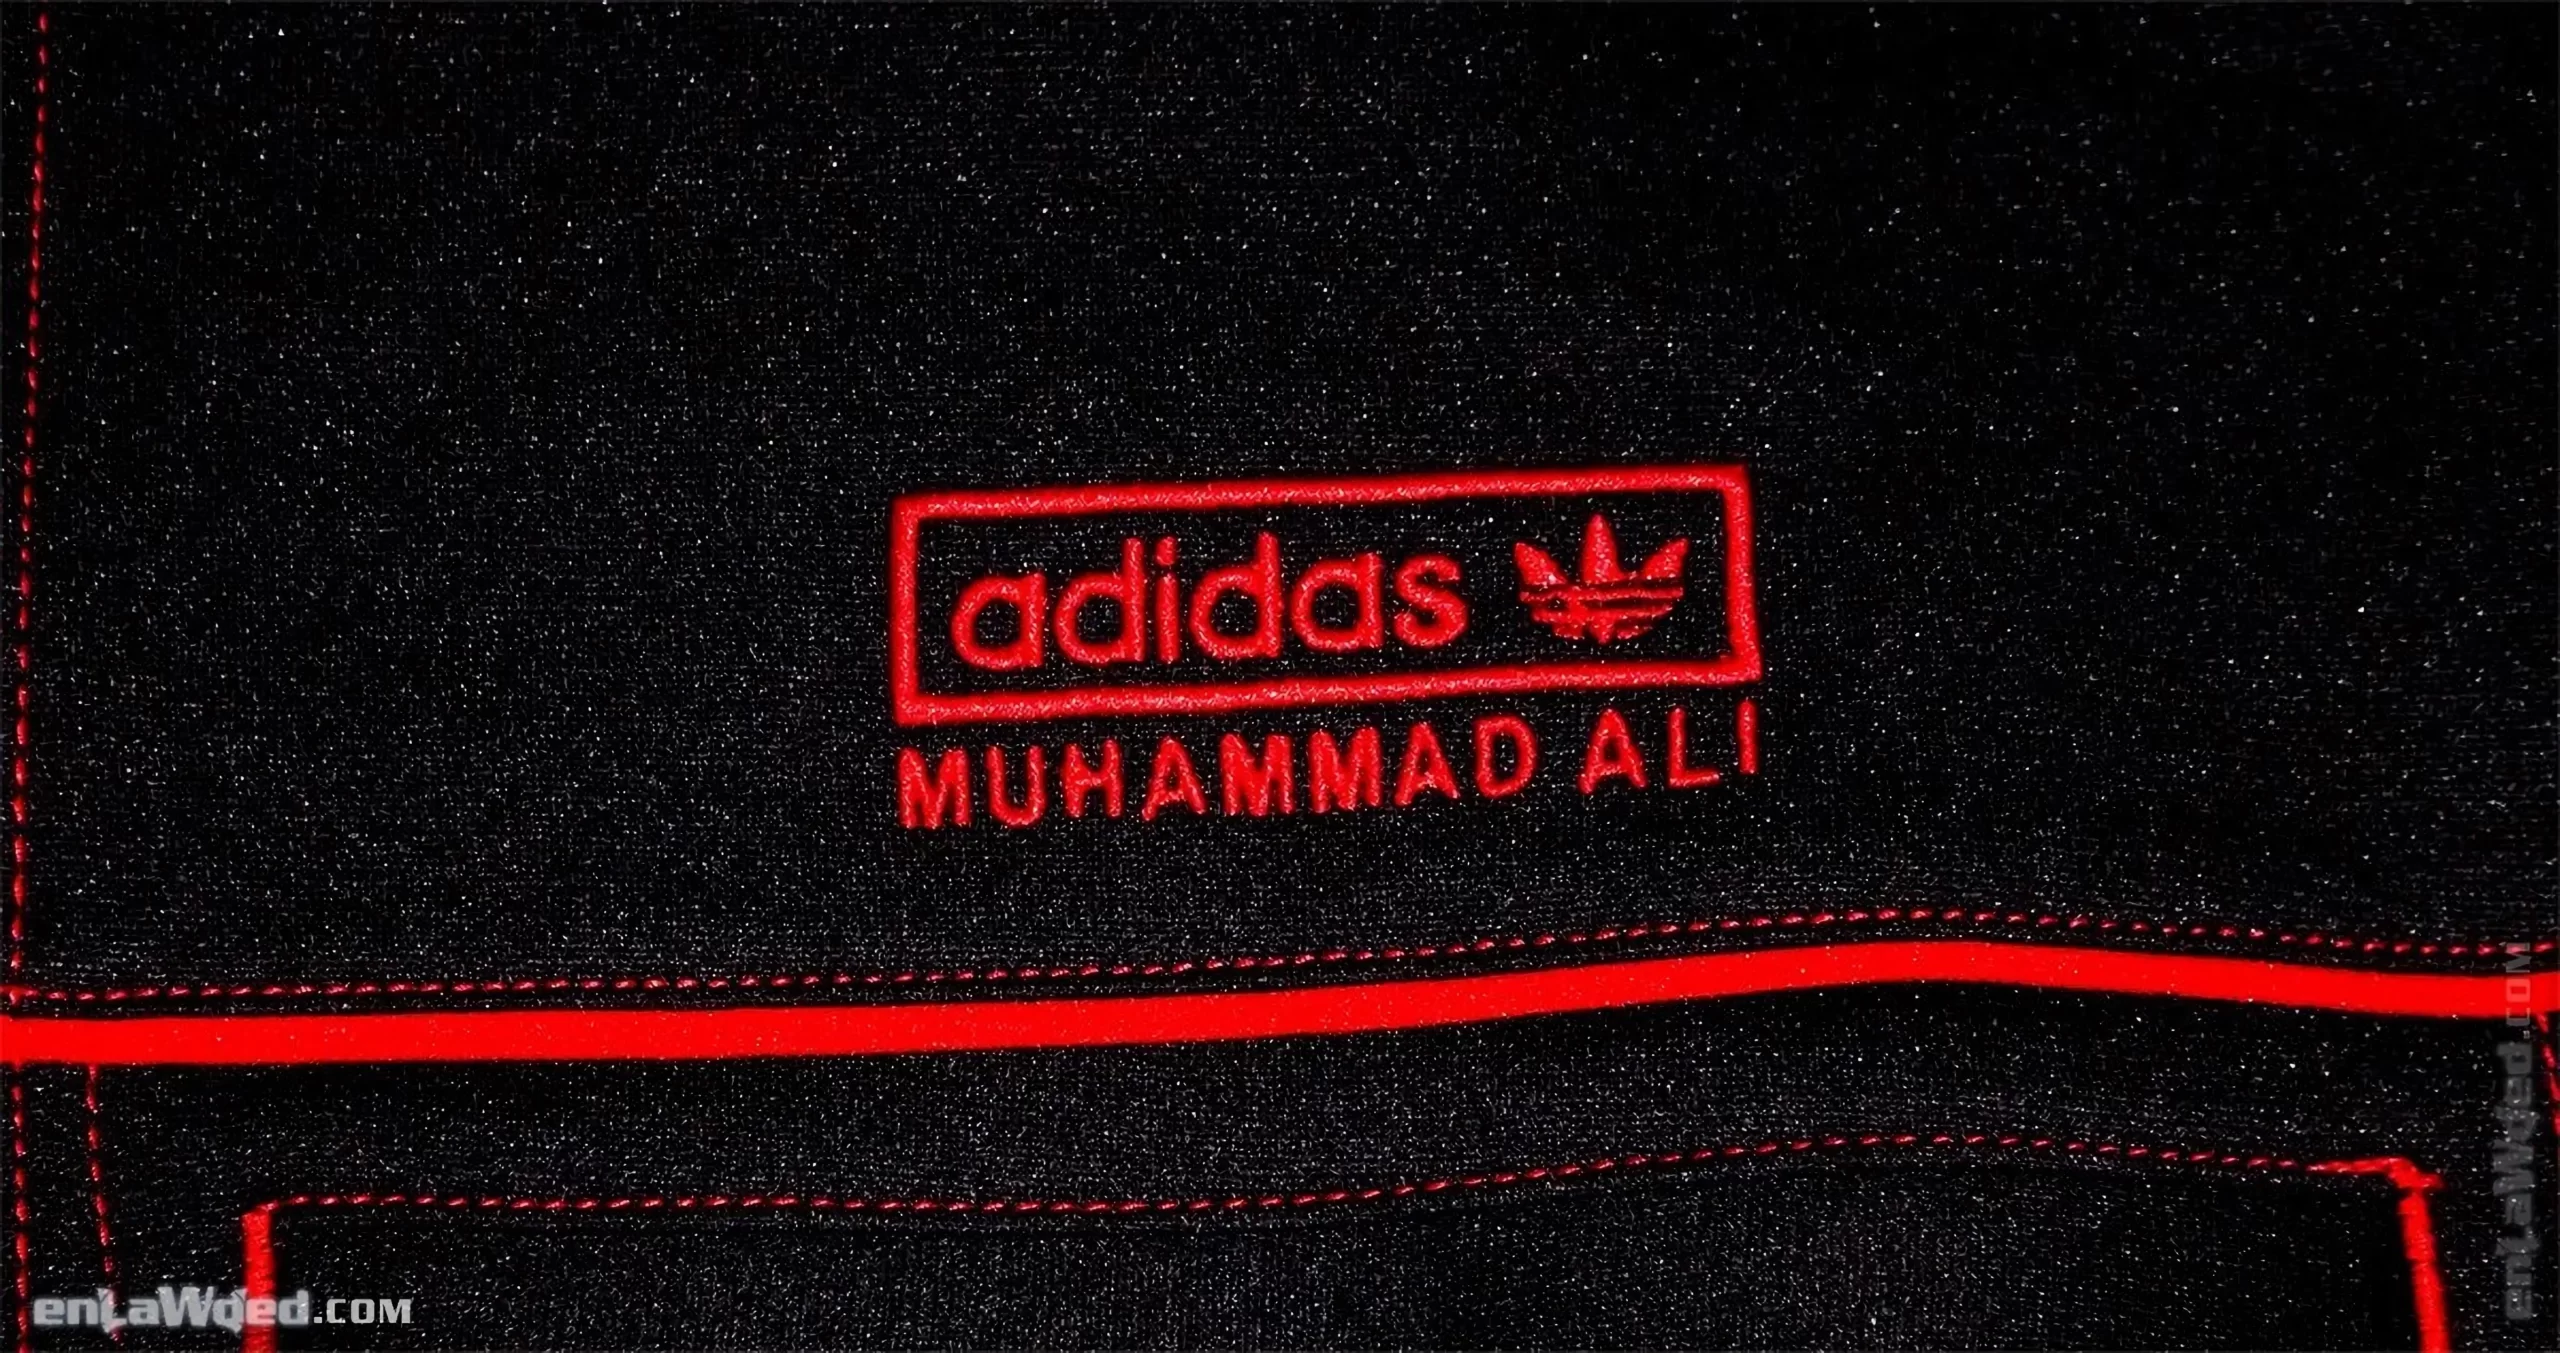 Men’s 2007 Muhammad Ali Conviction TT by Adidas: Impenetrable (EnLawded.com file #lmc4q52j9eajt6j3njk)